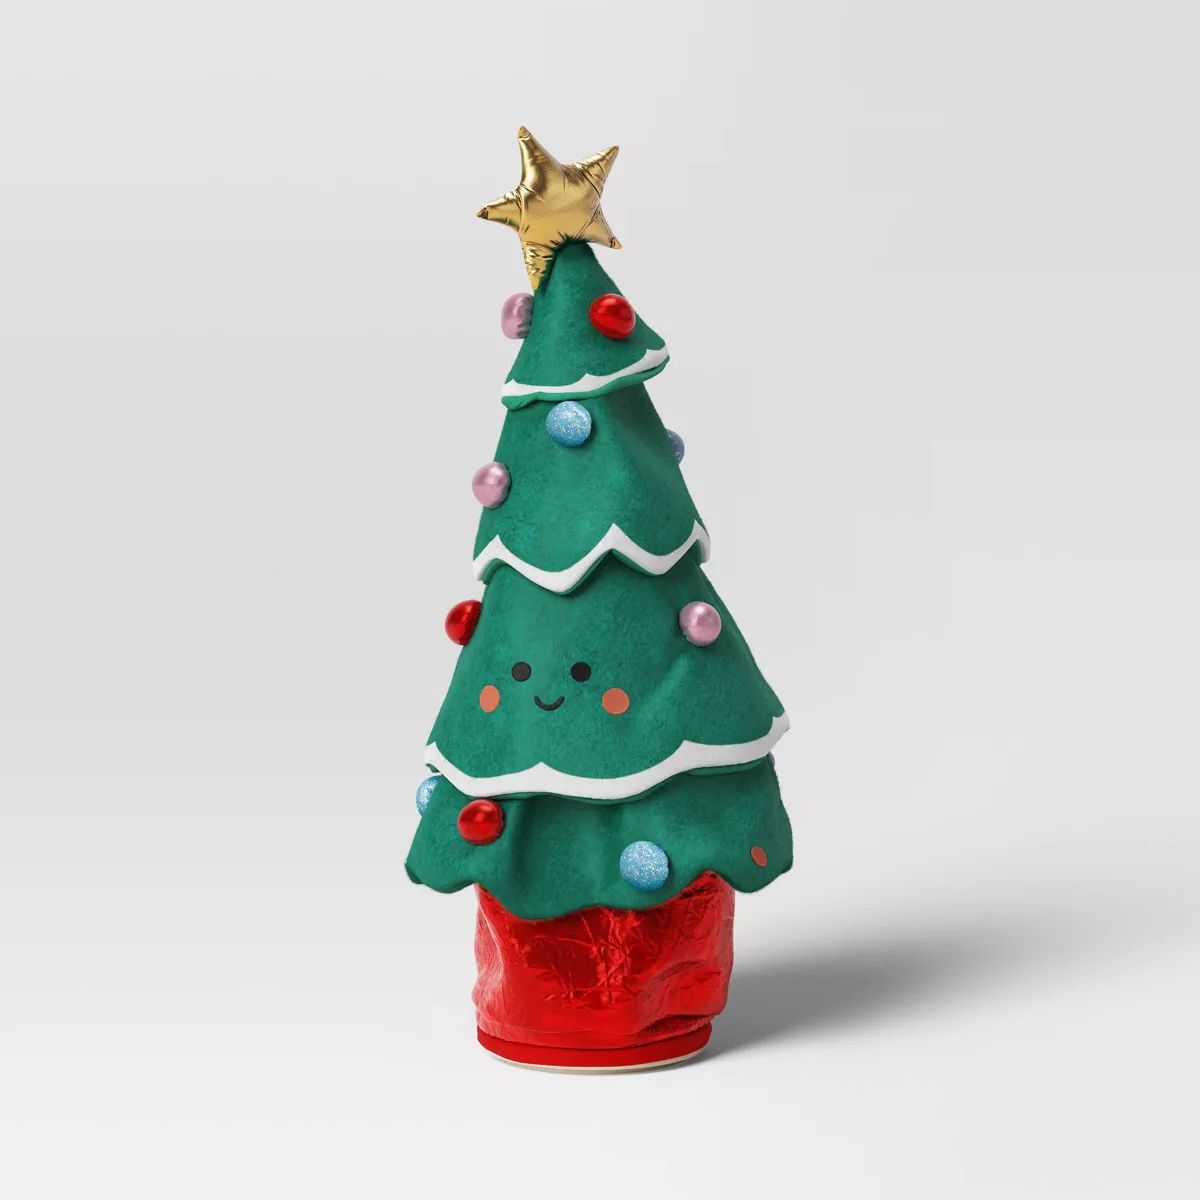 20" Battery Operated Animated Plush Dancing Christmas Tree Sculpture - Wondershop™ Green | Target